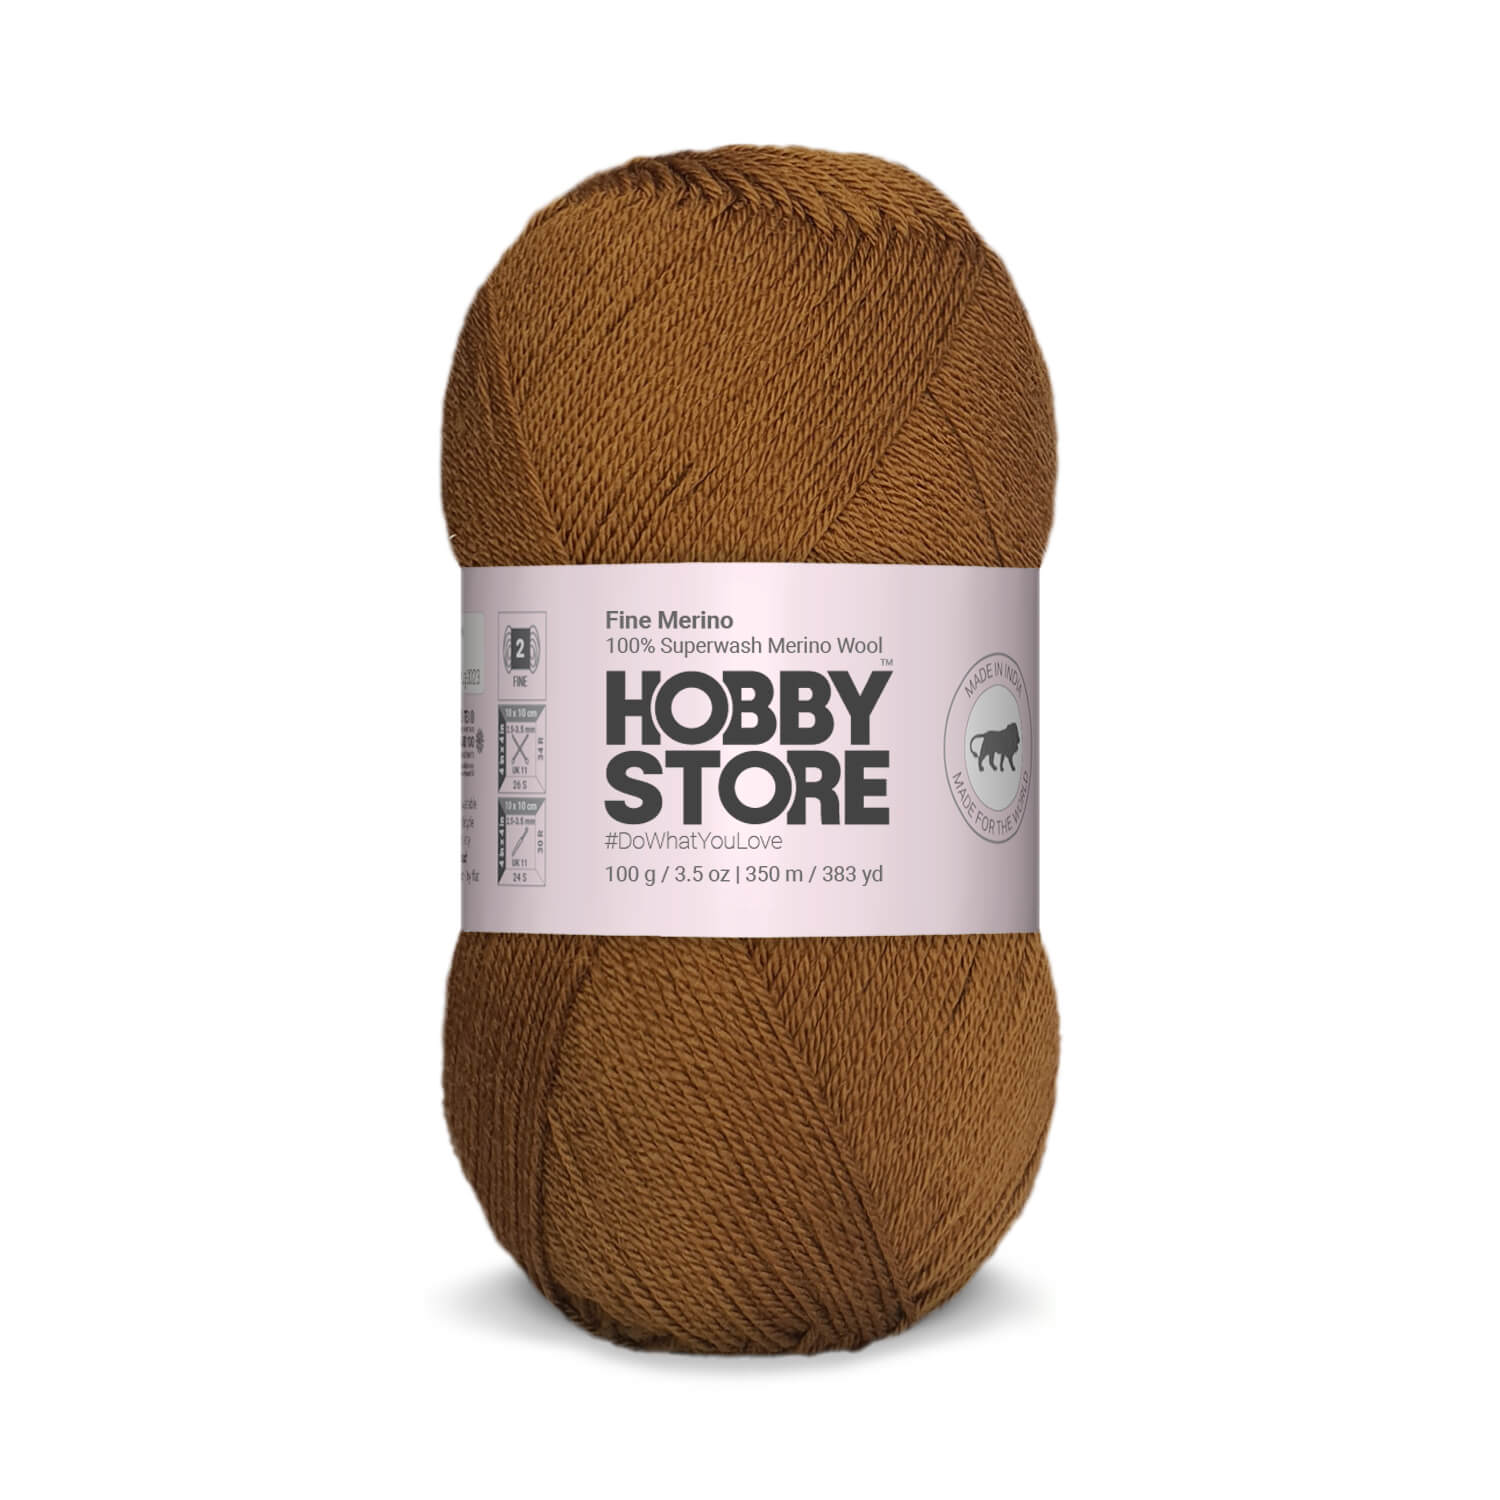 Fine Merino Wool by Hobby Store - Just Brown FM015